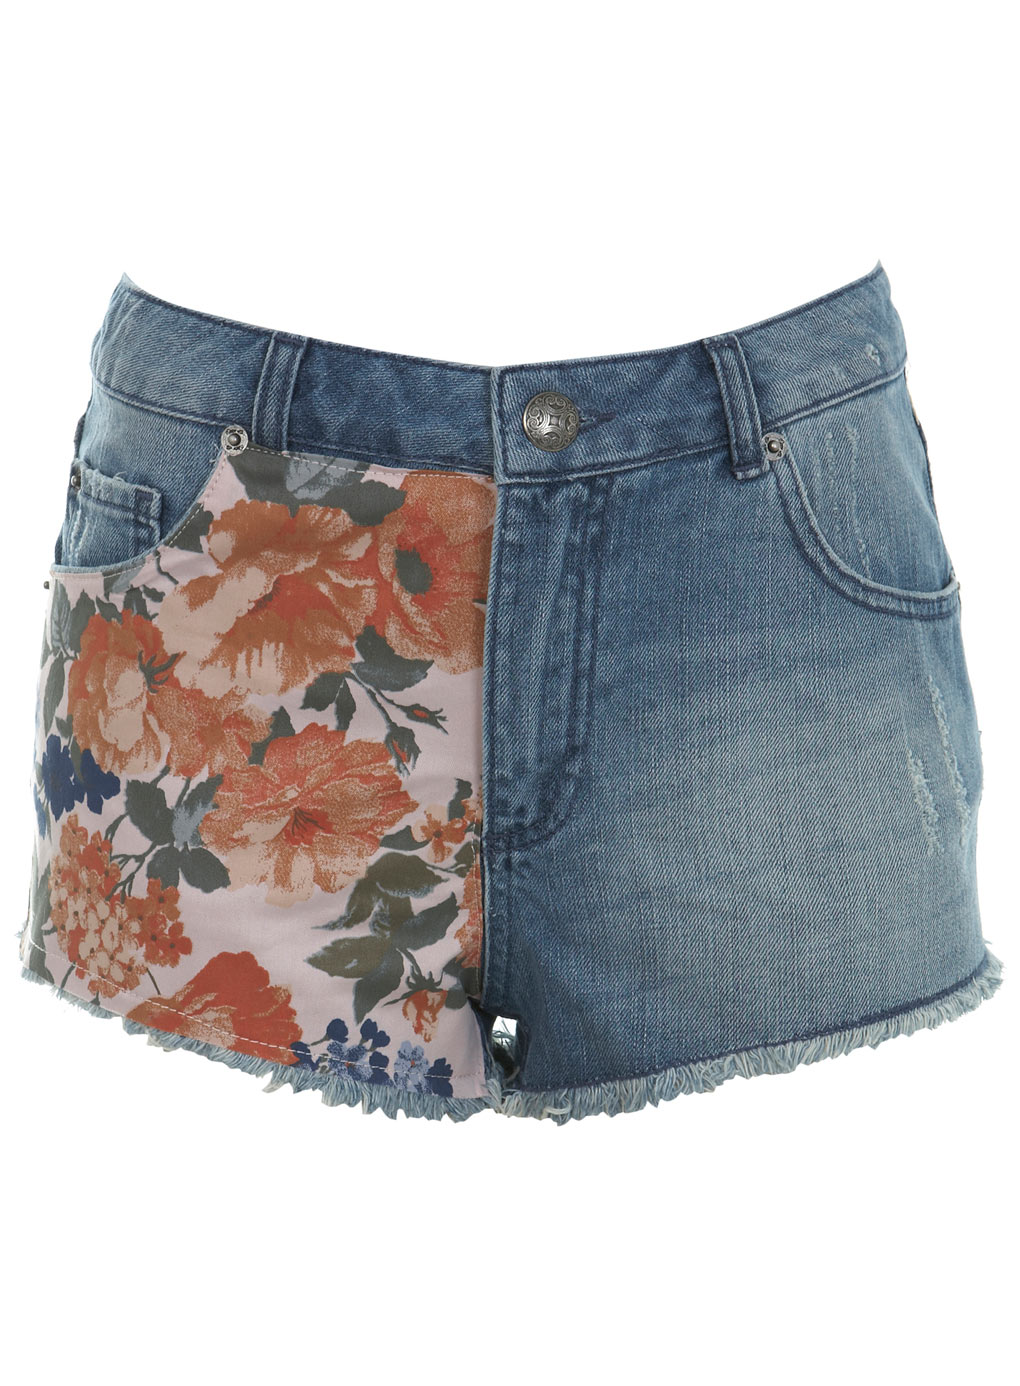 Style me cheap...: Summer essentials: We love short shorts.